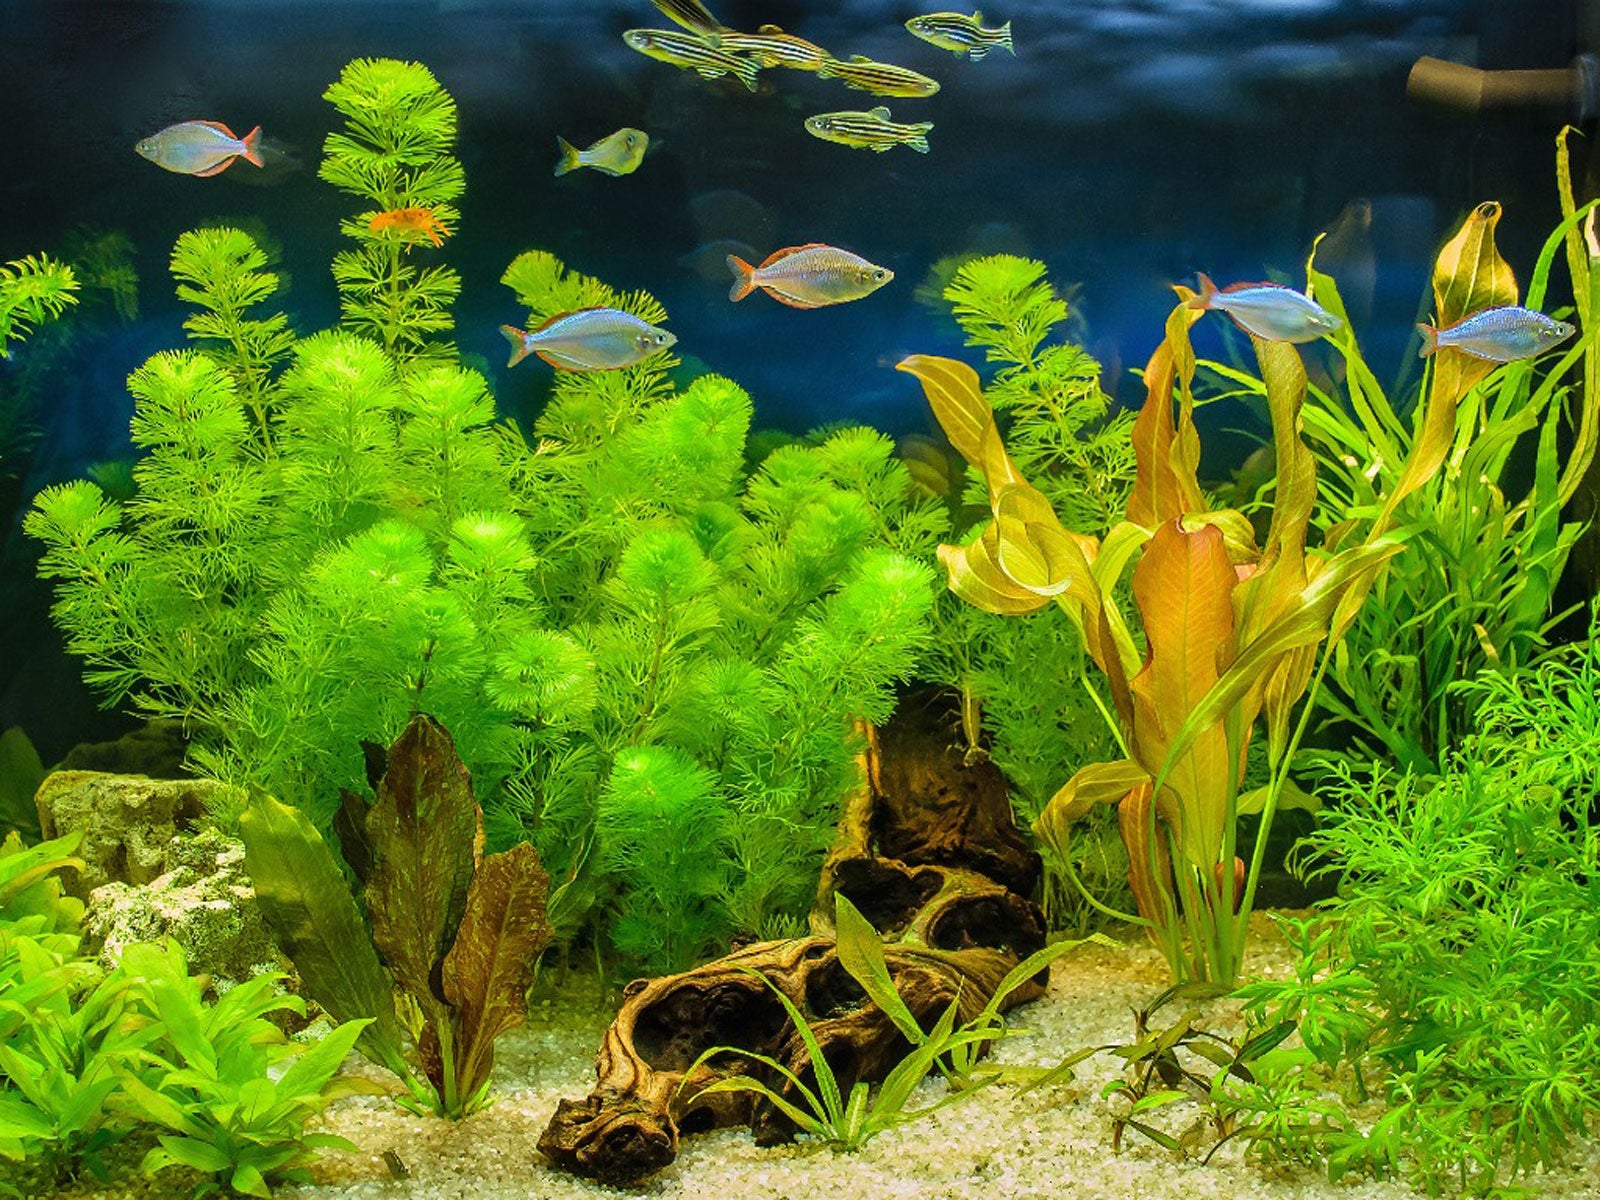 growing aquarium plants - how to grow aquarium plants